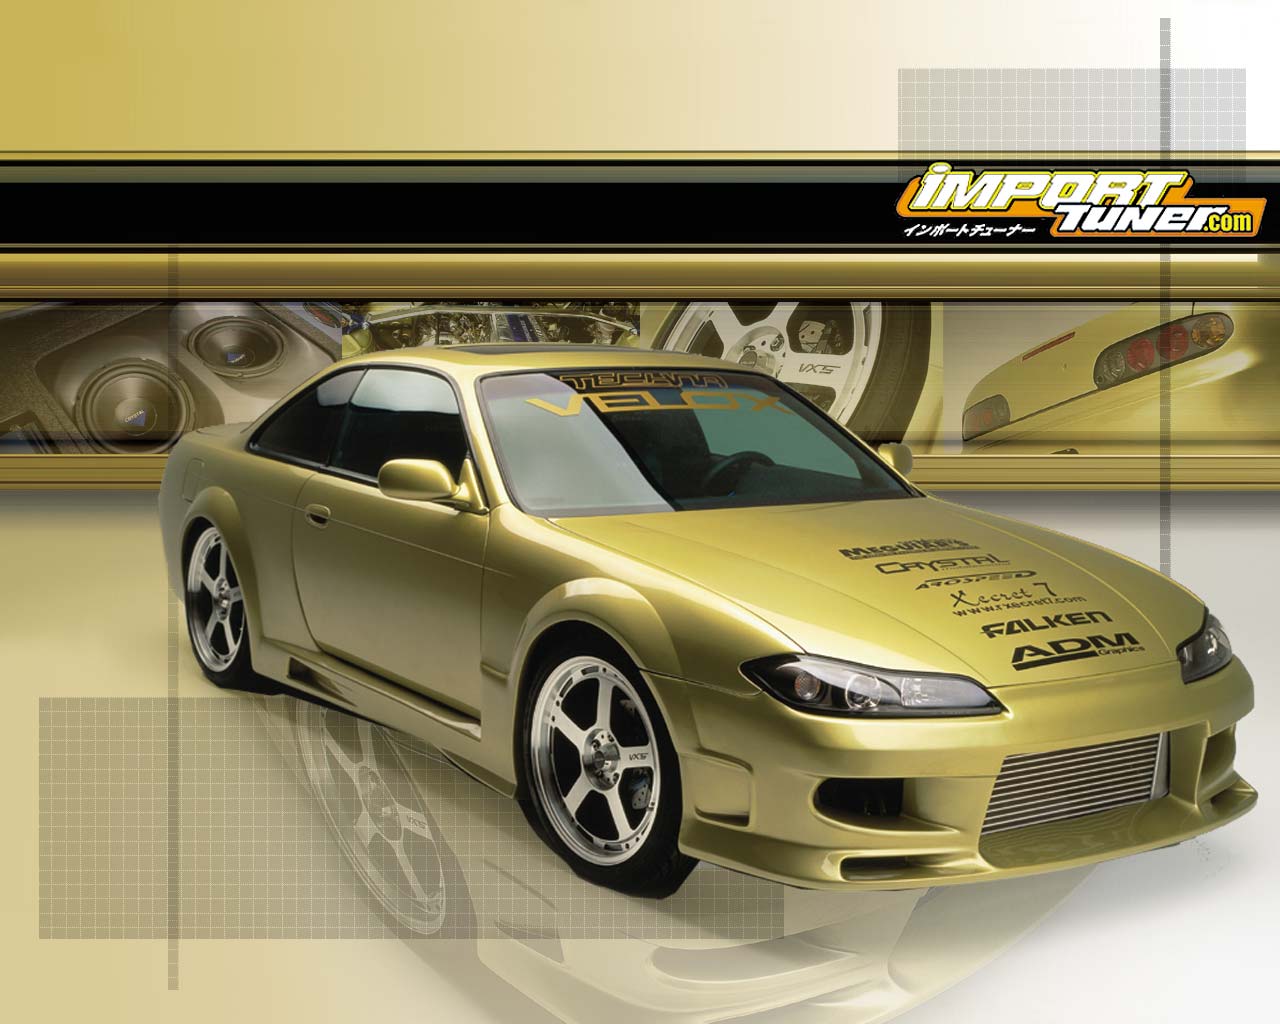 Need For Speed Acura NSX Honda NSX Car Tuner Car Low Sports Car Video Games  Pop Up Headlights Wallpaper  Resolution1920x1080  ID619185  wallhacom